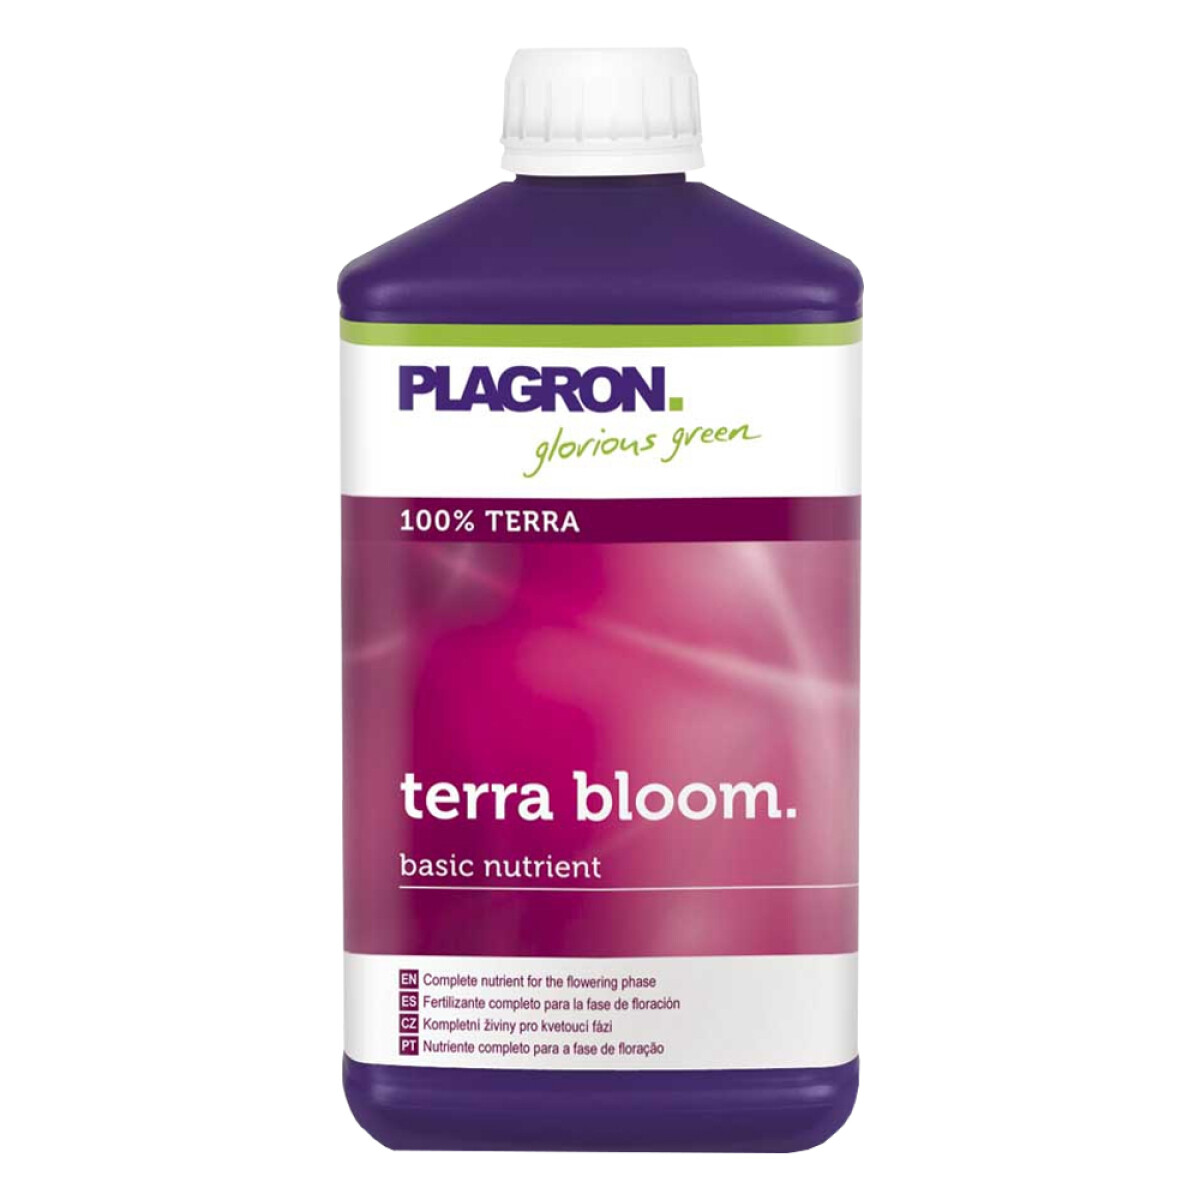 TERRA BLOOM PLAGRON - 1L 